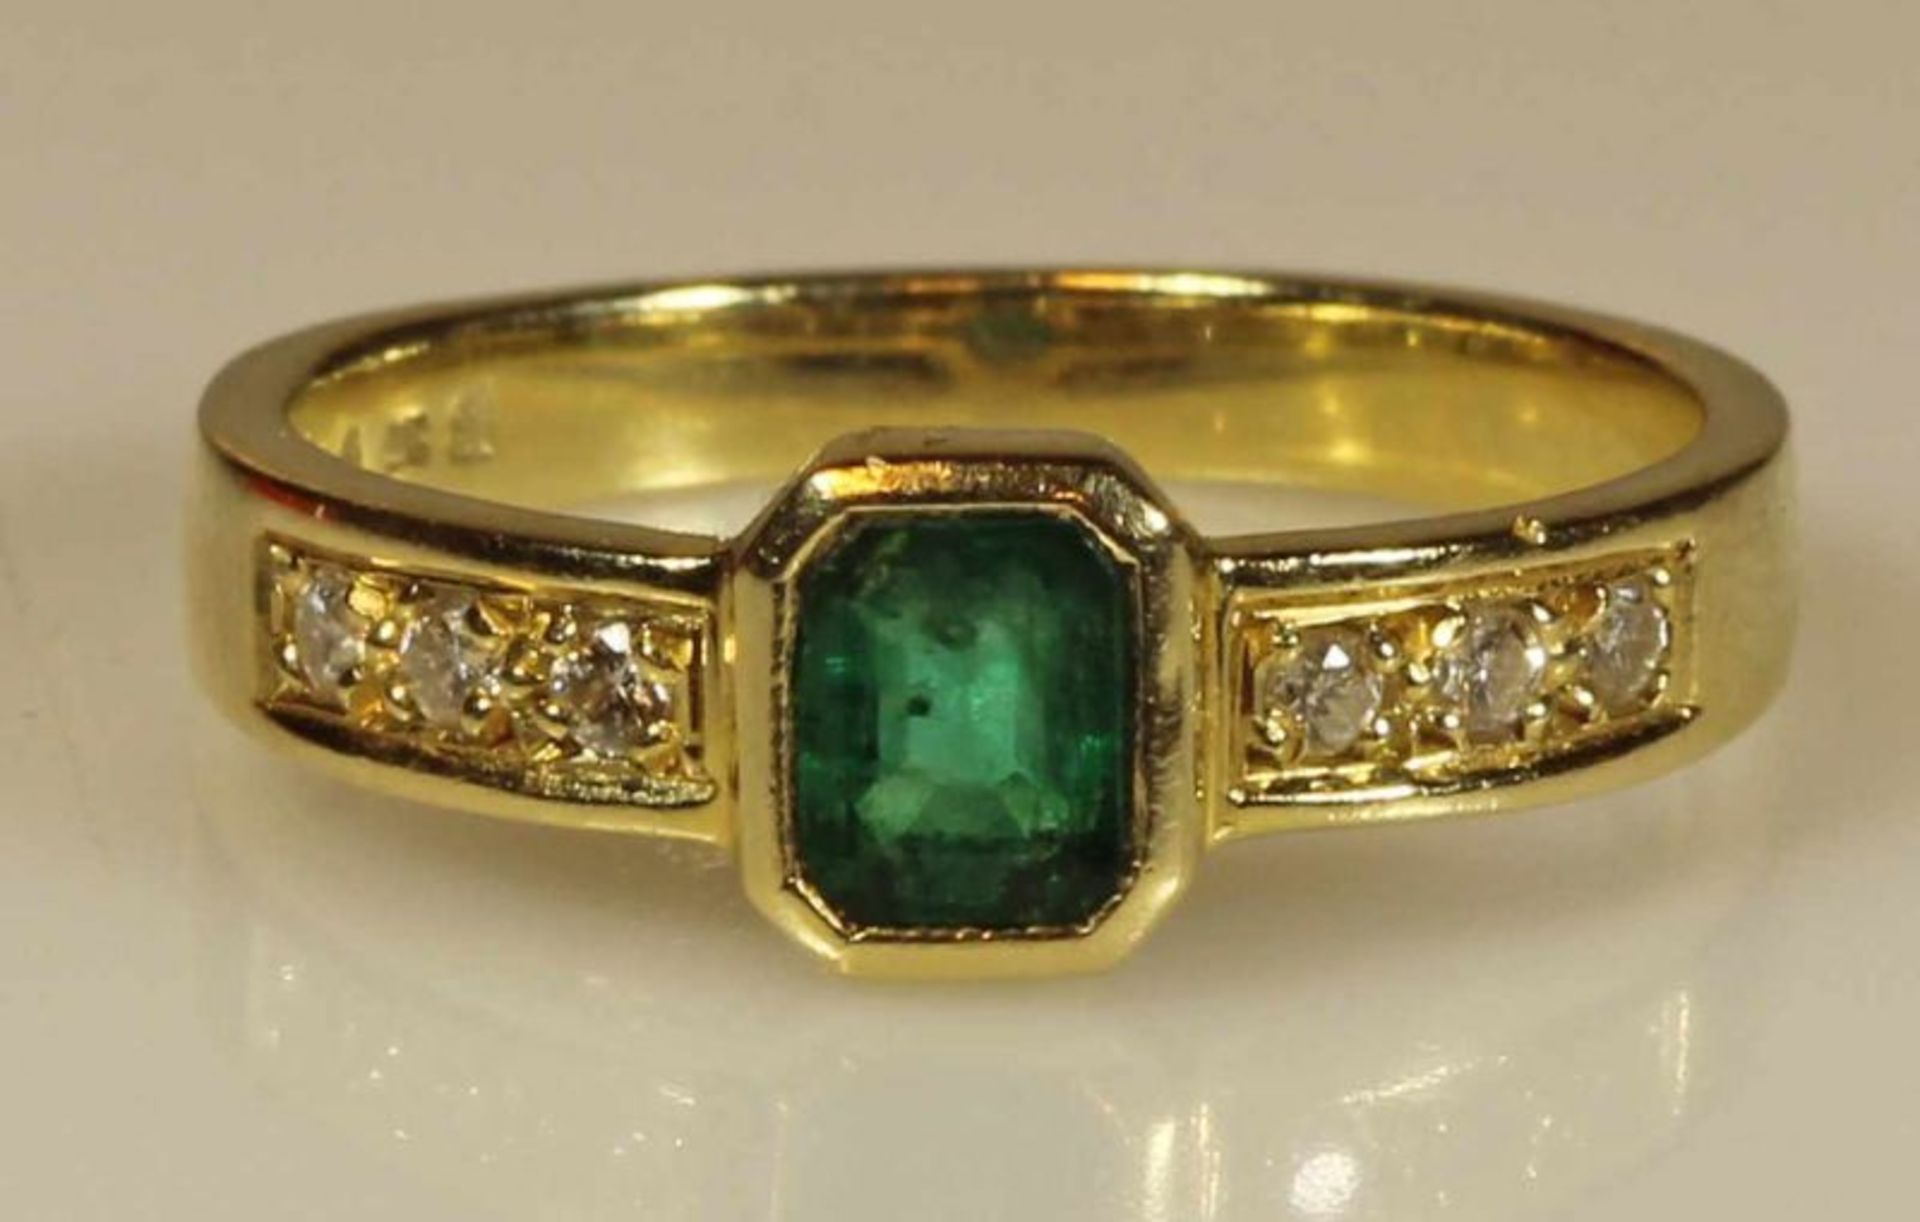 Ring, GG 585, 1 rechteckig facettierter Smaragd, 6 Besatzdiamanten, 4 g, RM 17.5 20.00 % buyer's